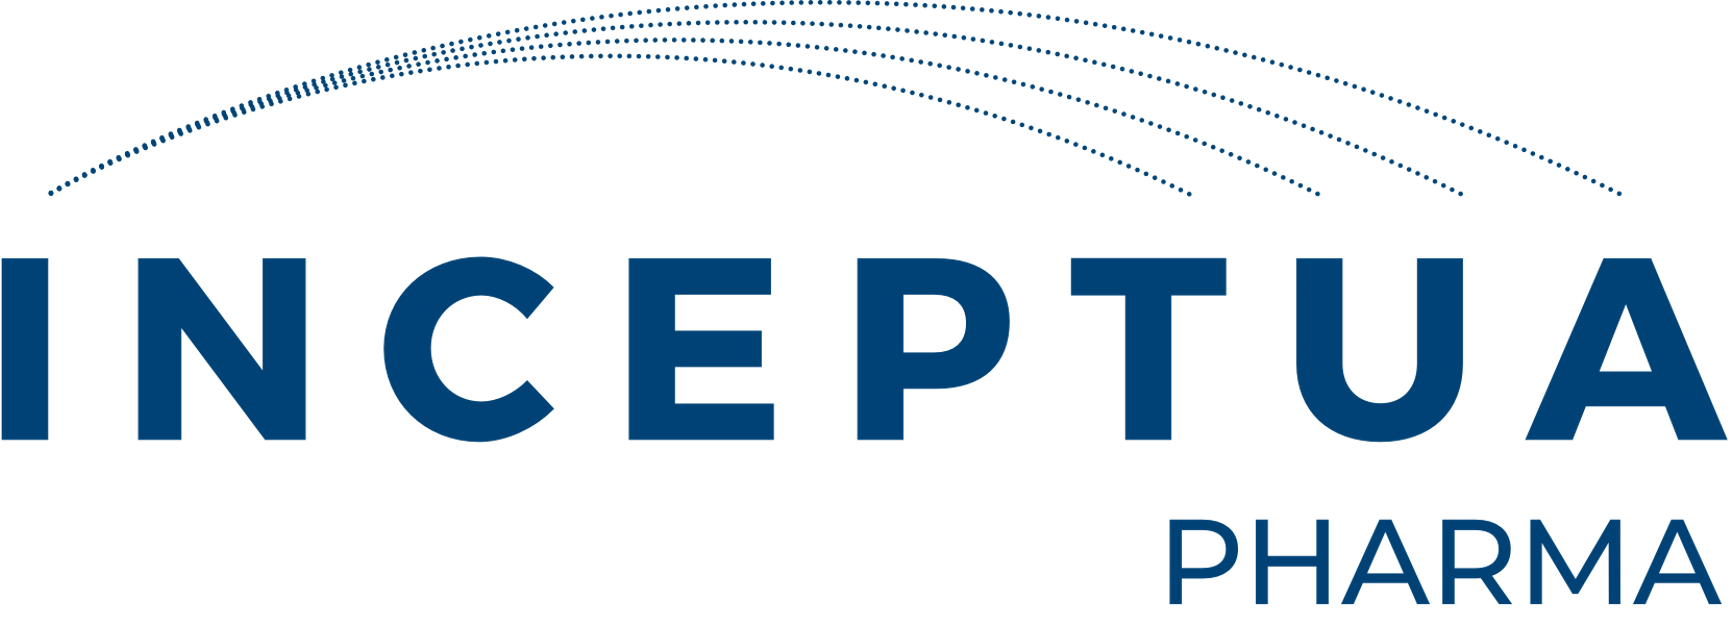 Inceptua Pharma Logo Blue